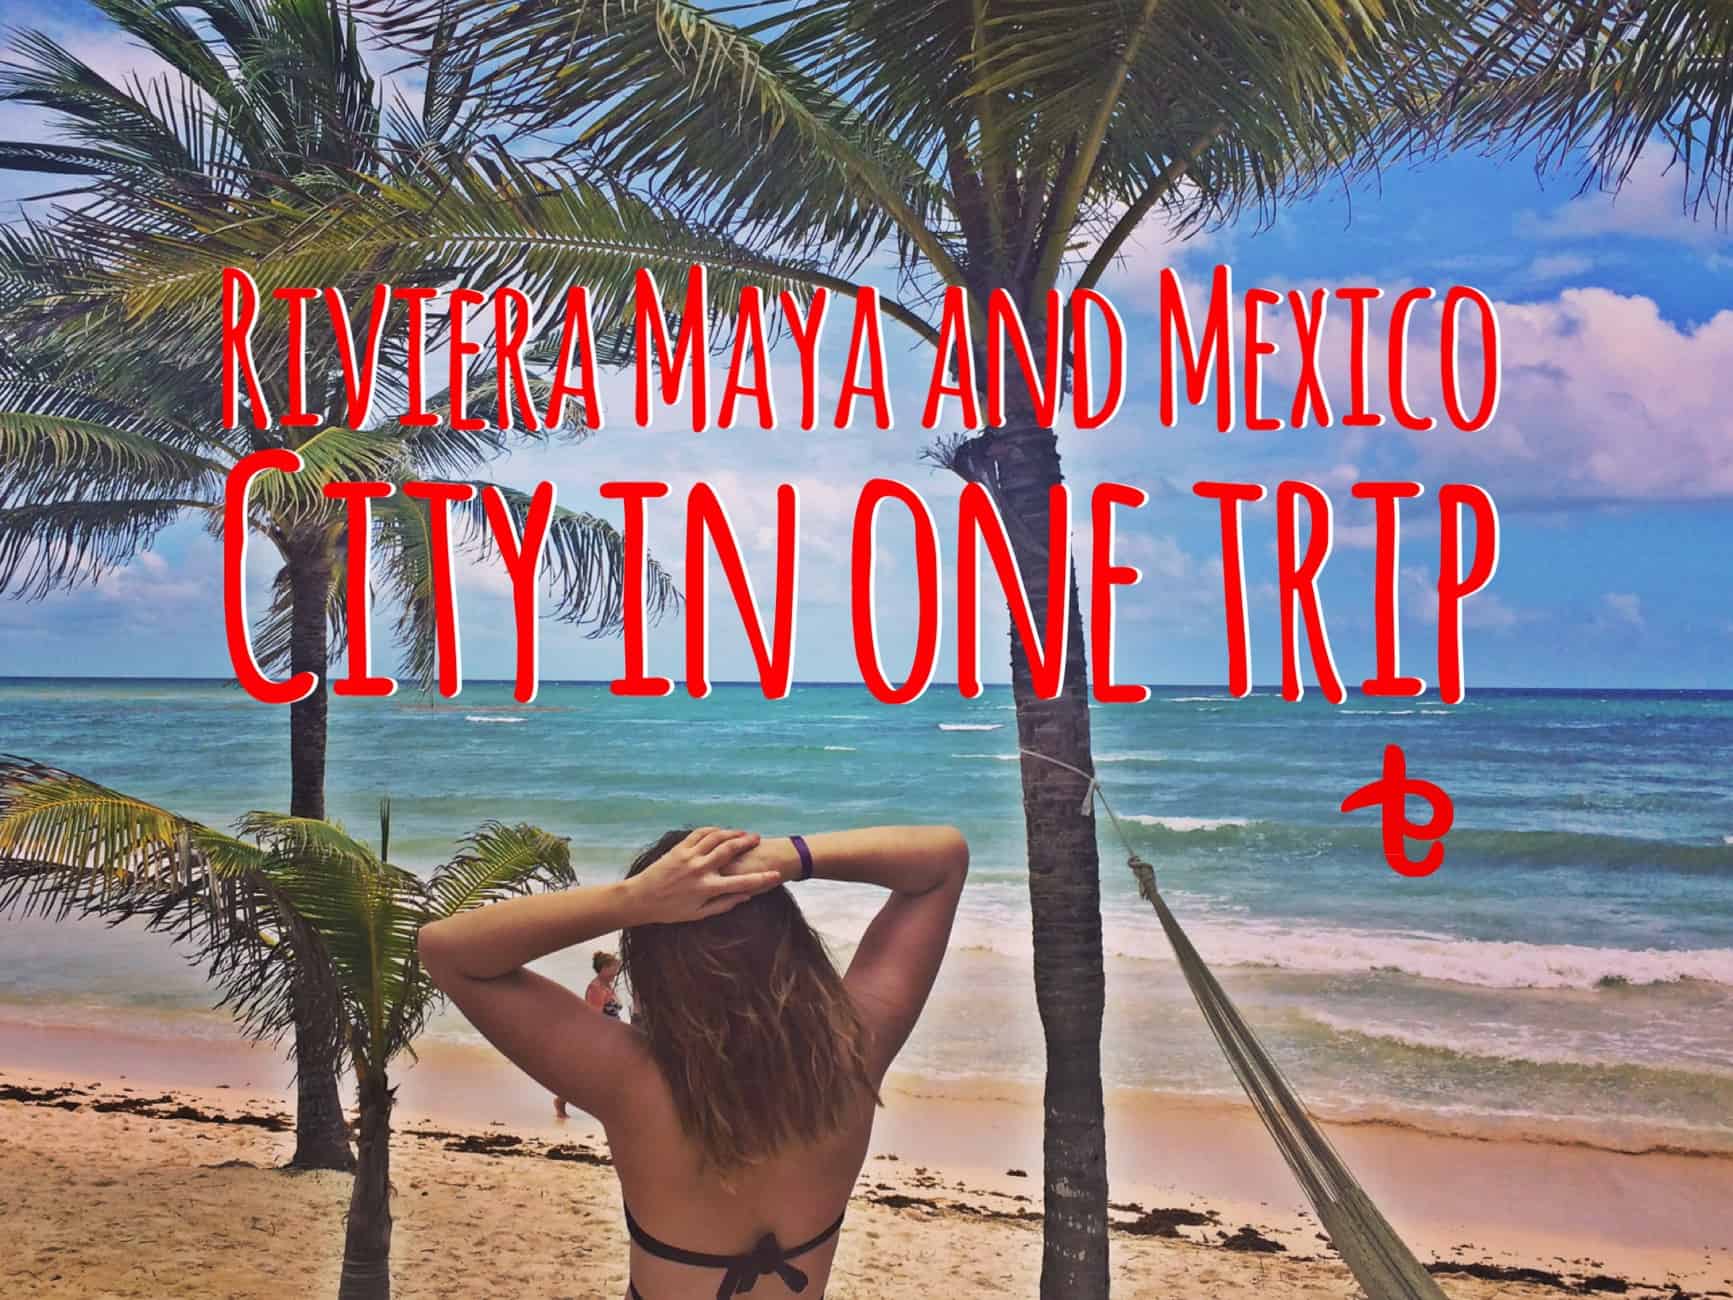 Mexico City and Riviera Maya